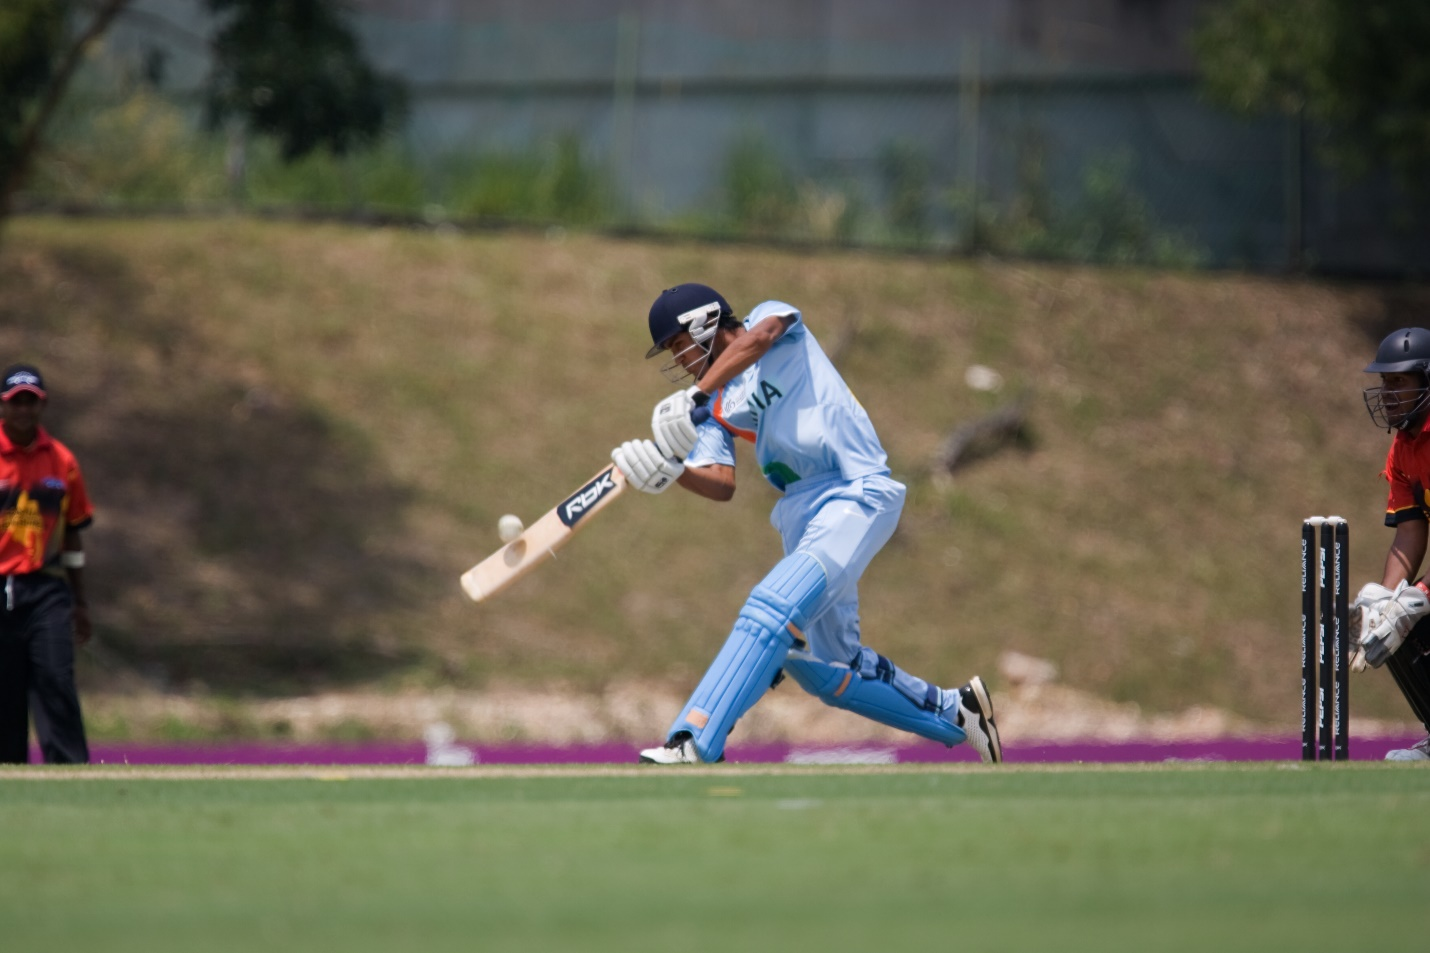 An Indian cricket batsman in action